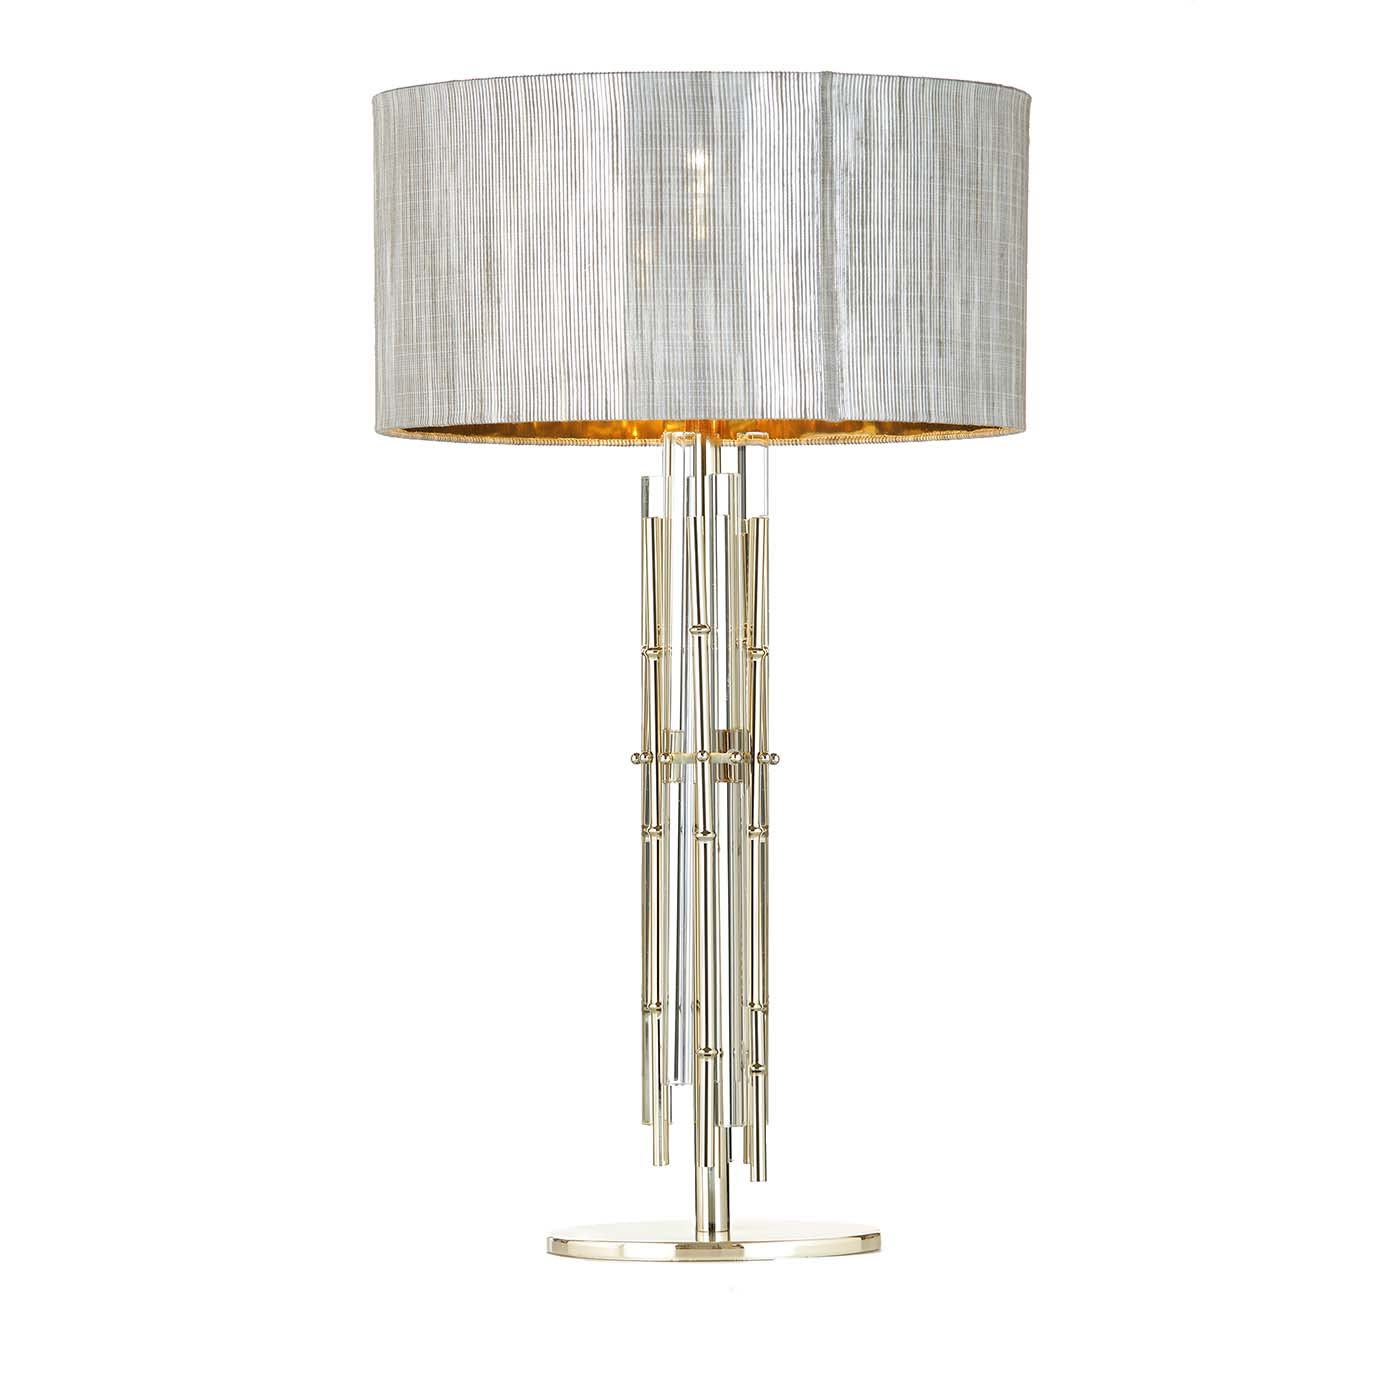 Bamboo Table Lamp - Il Paralume Marina